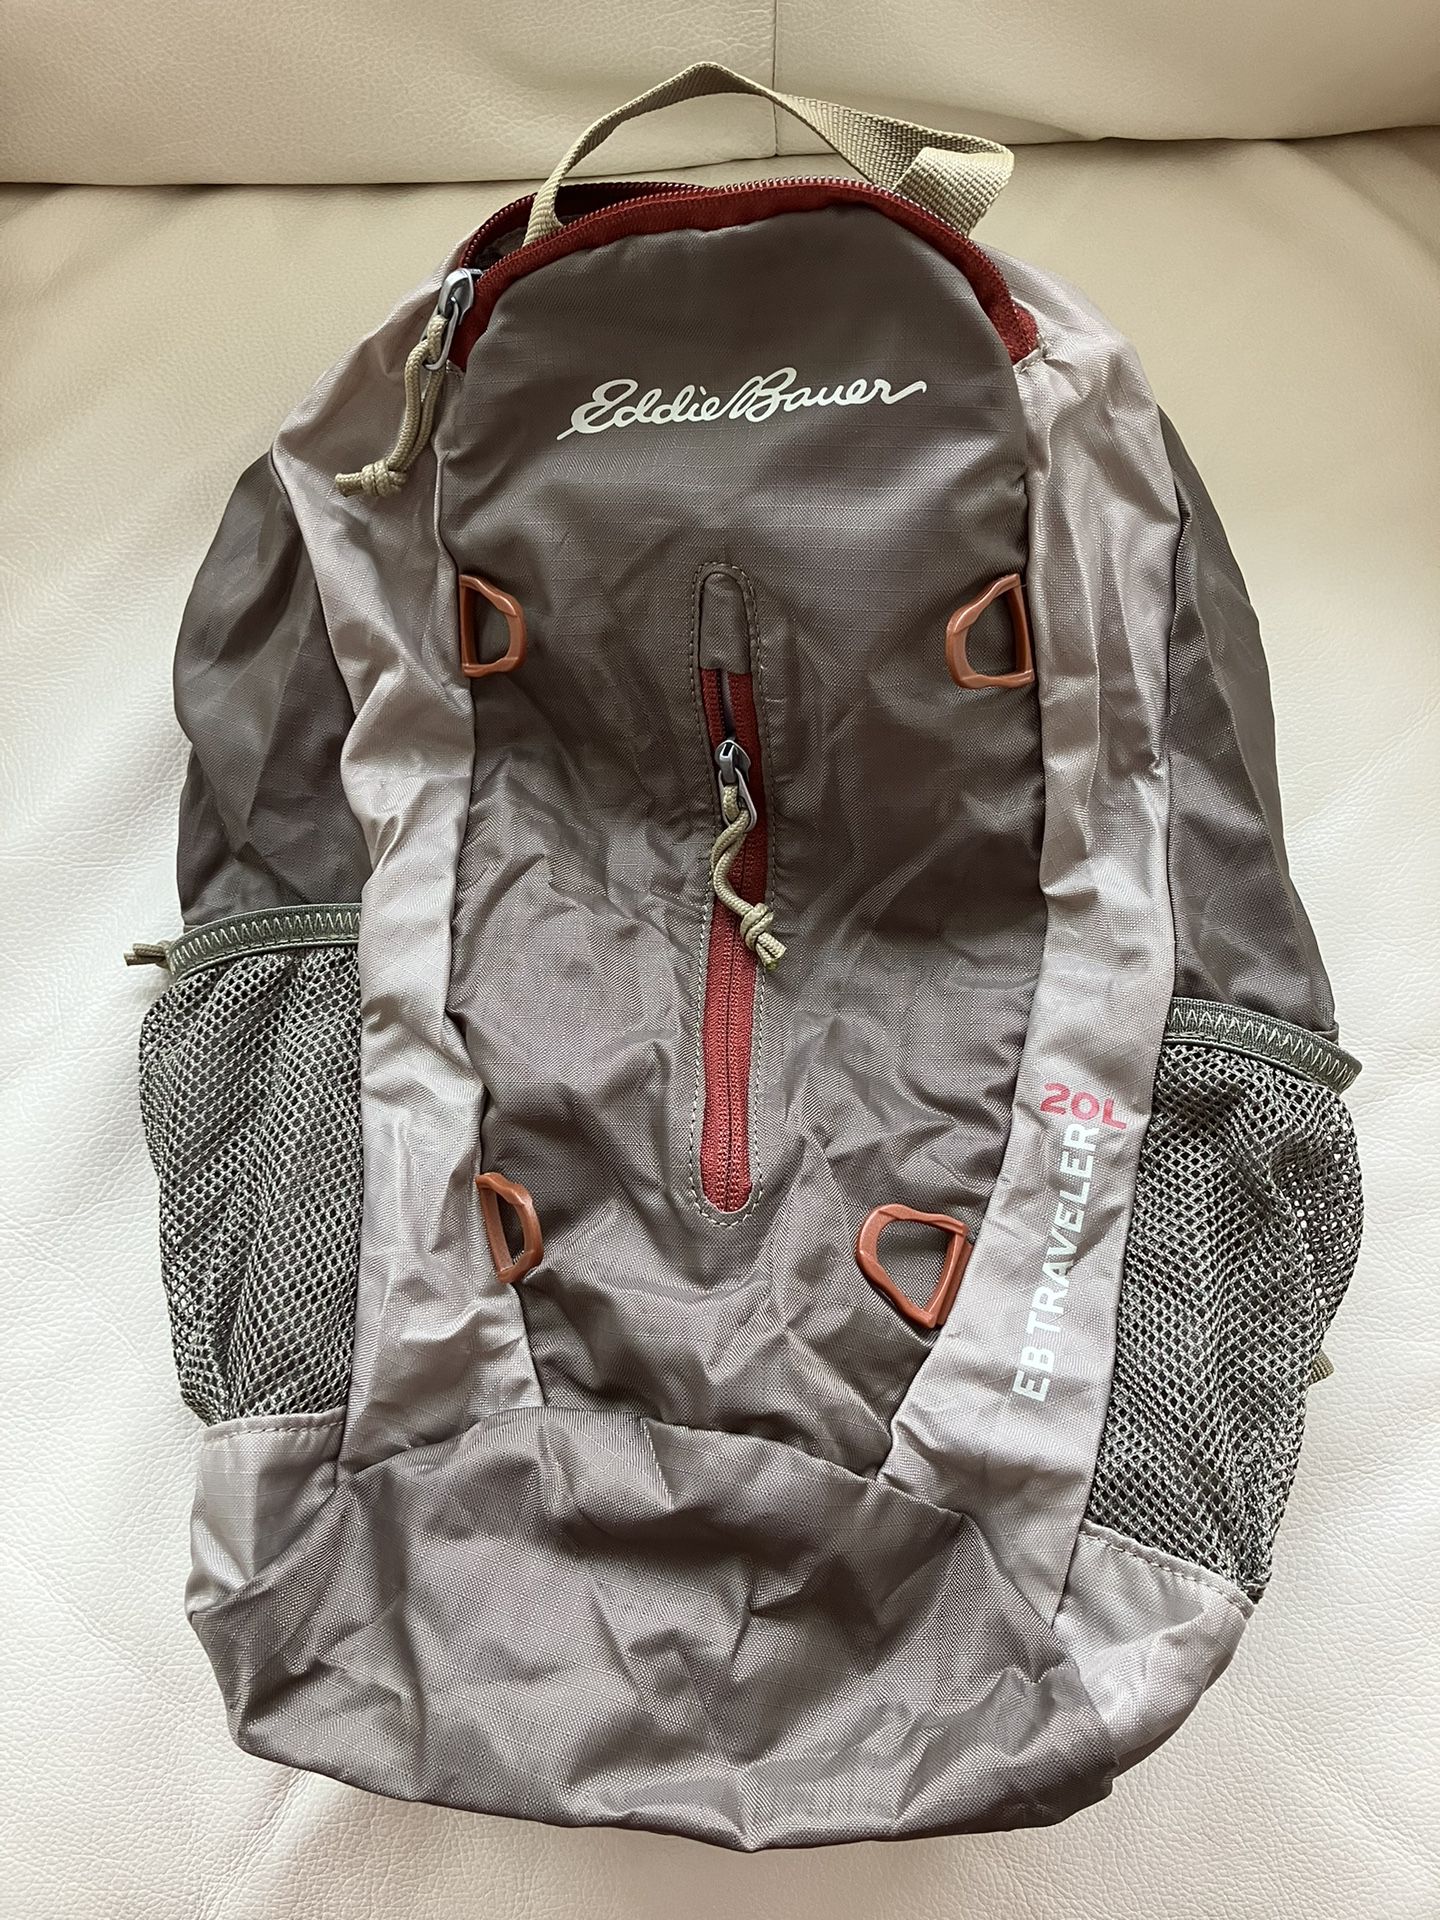 Eddie Bauer Rippac Traveler 20 Liter Packable backpack NEW